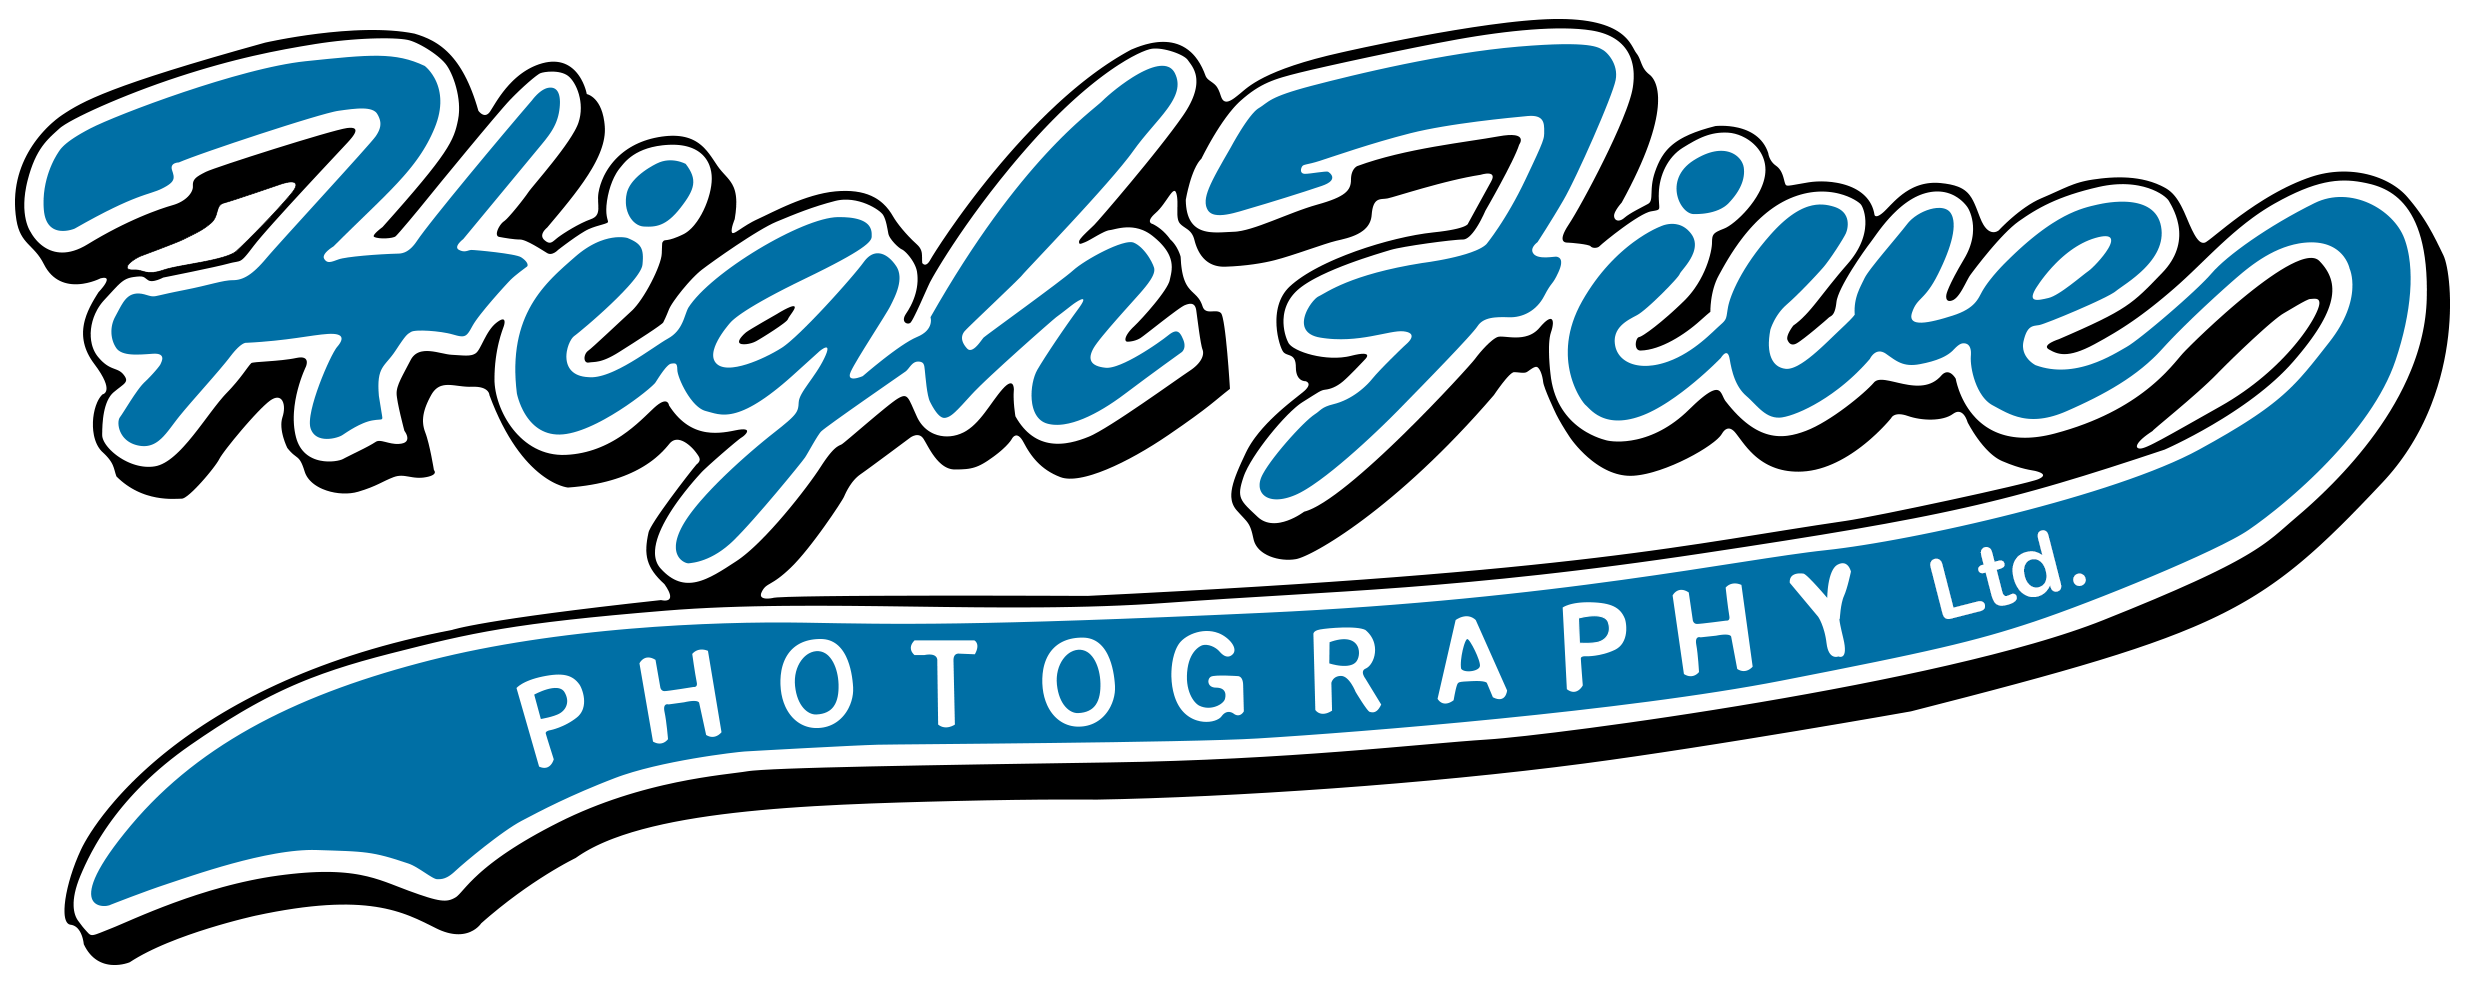 HighFive Photography. 